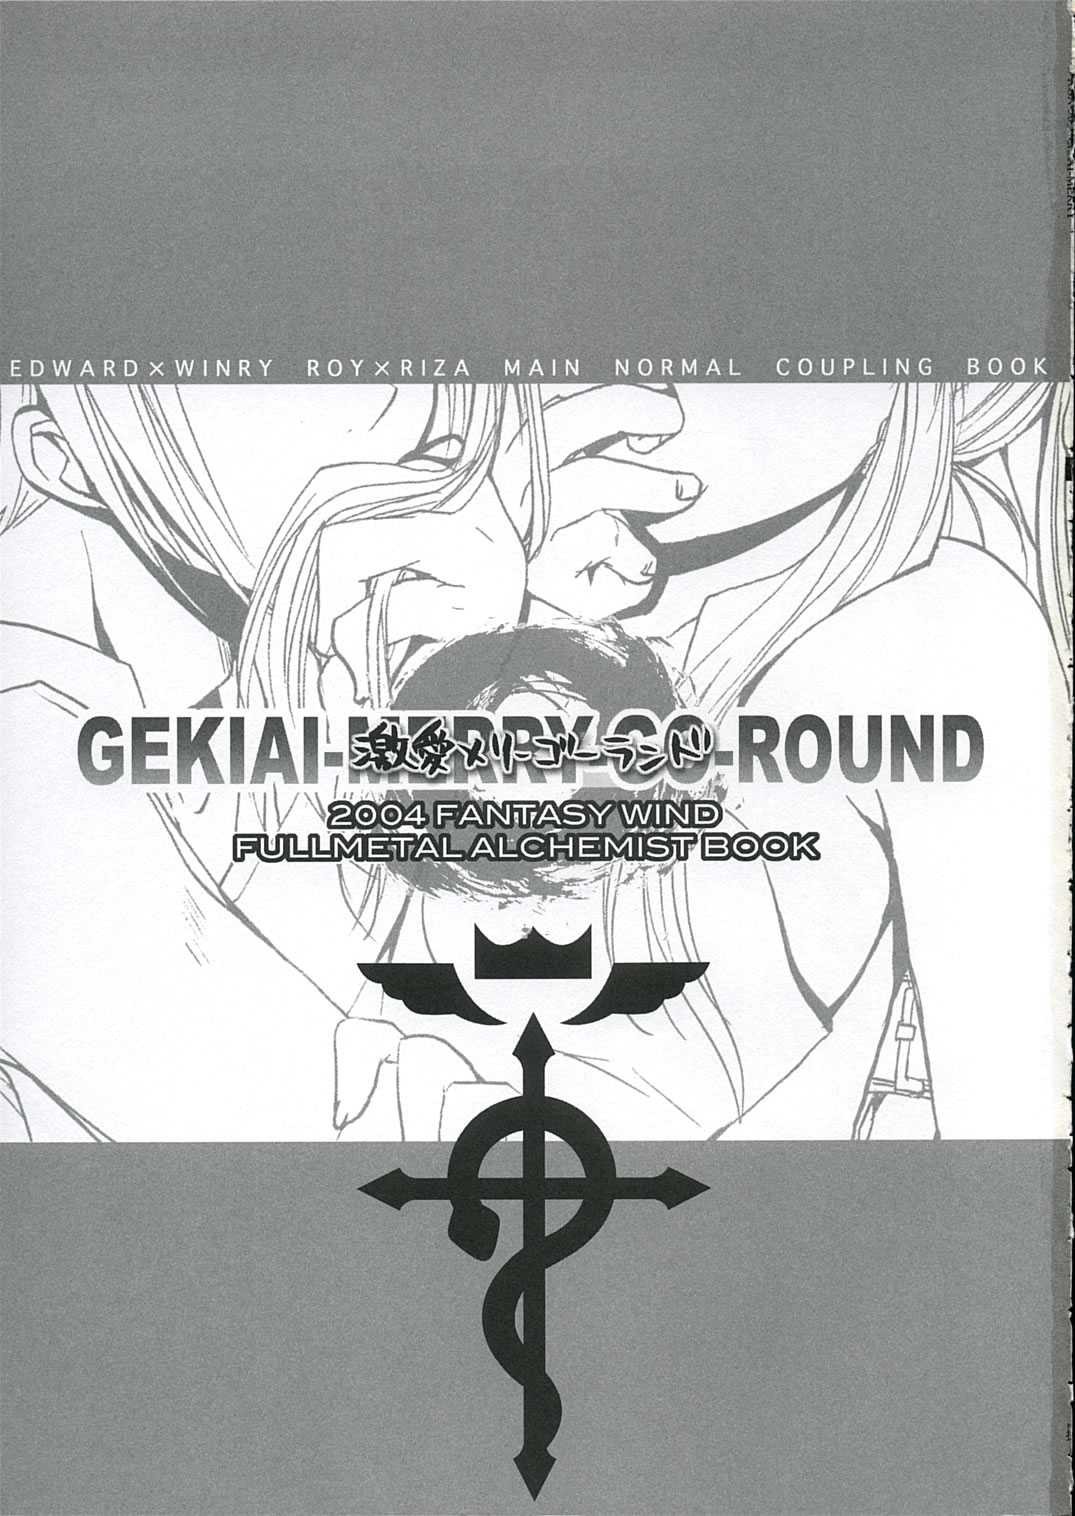 [FANTASY WIND] GEKIAI-MERRY-GO-ROUND (fullmetal alchemist) 